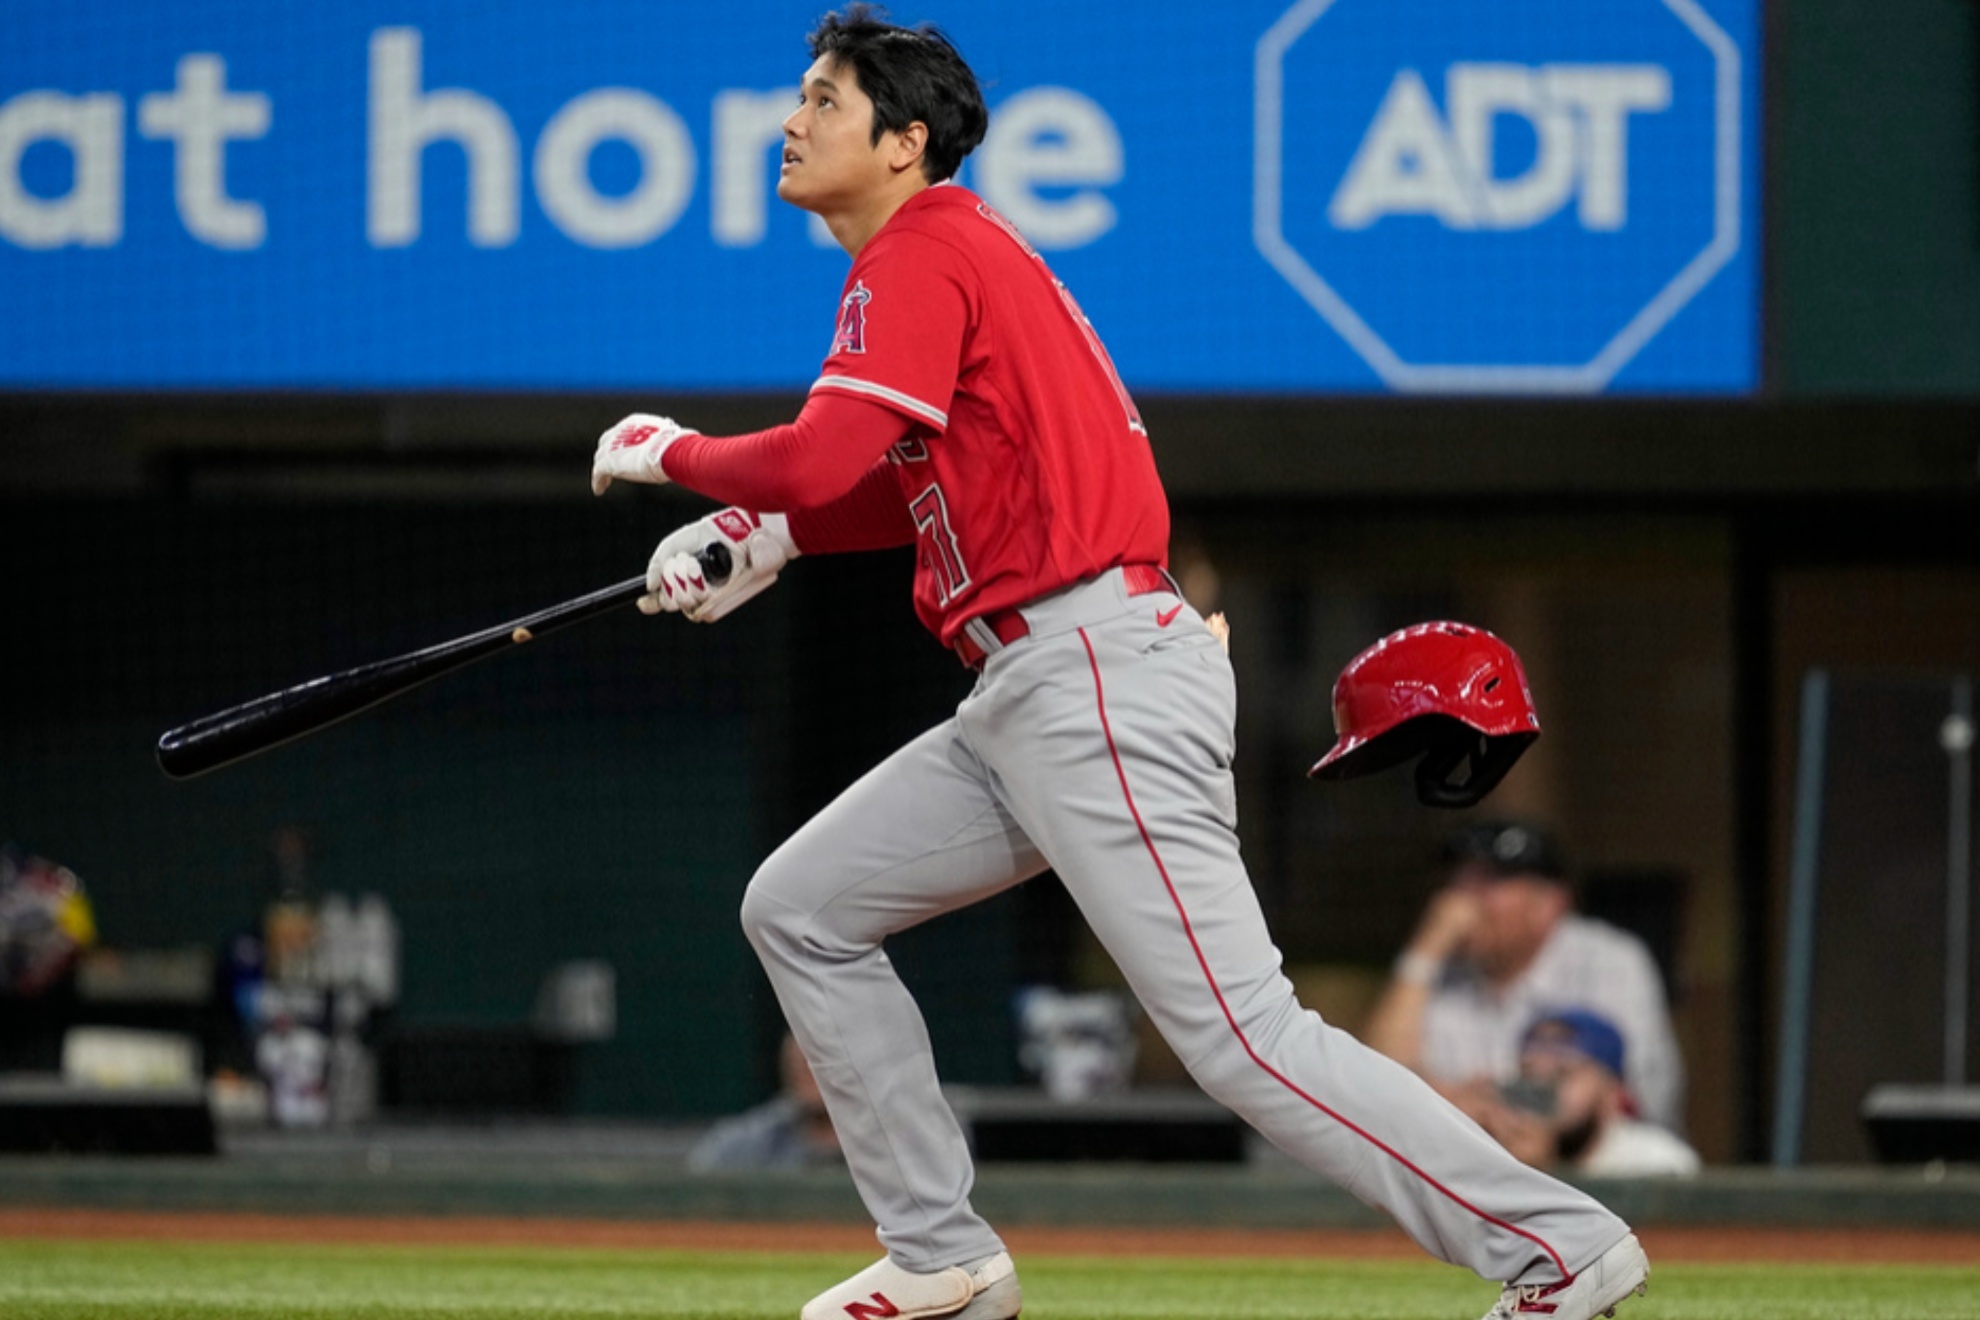 Shohei Ohtani hit his 42 home run of the season on Wednesday